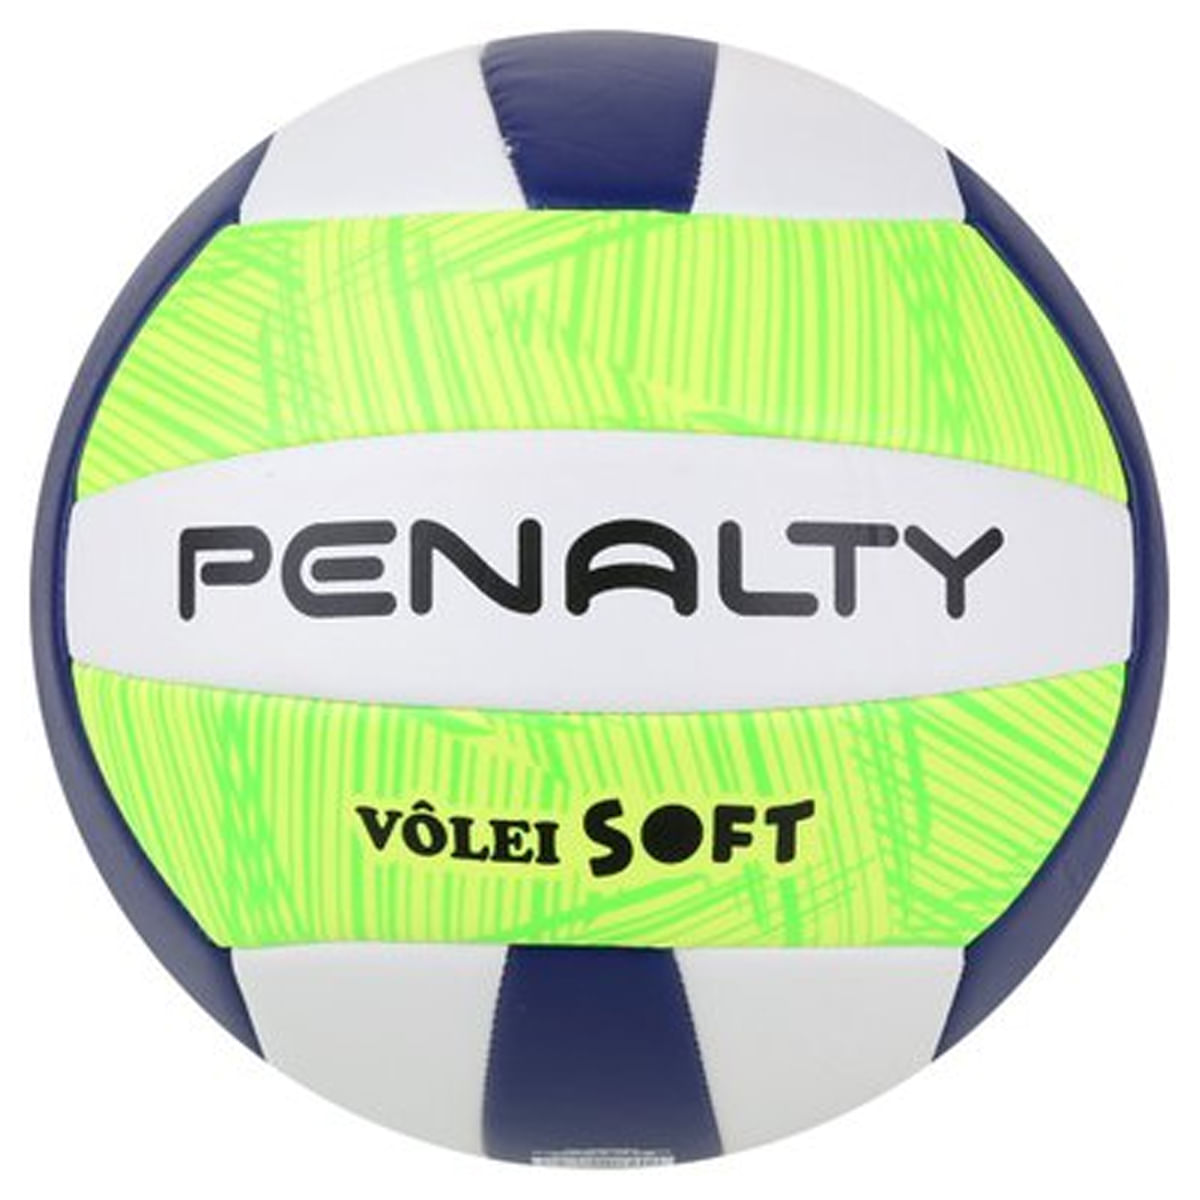 Bola Vôlei Penalty VP 5000 - Amarelo/Roxo/Preto - Bola Vôlei